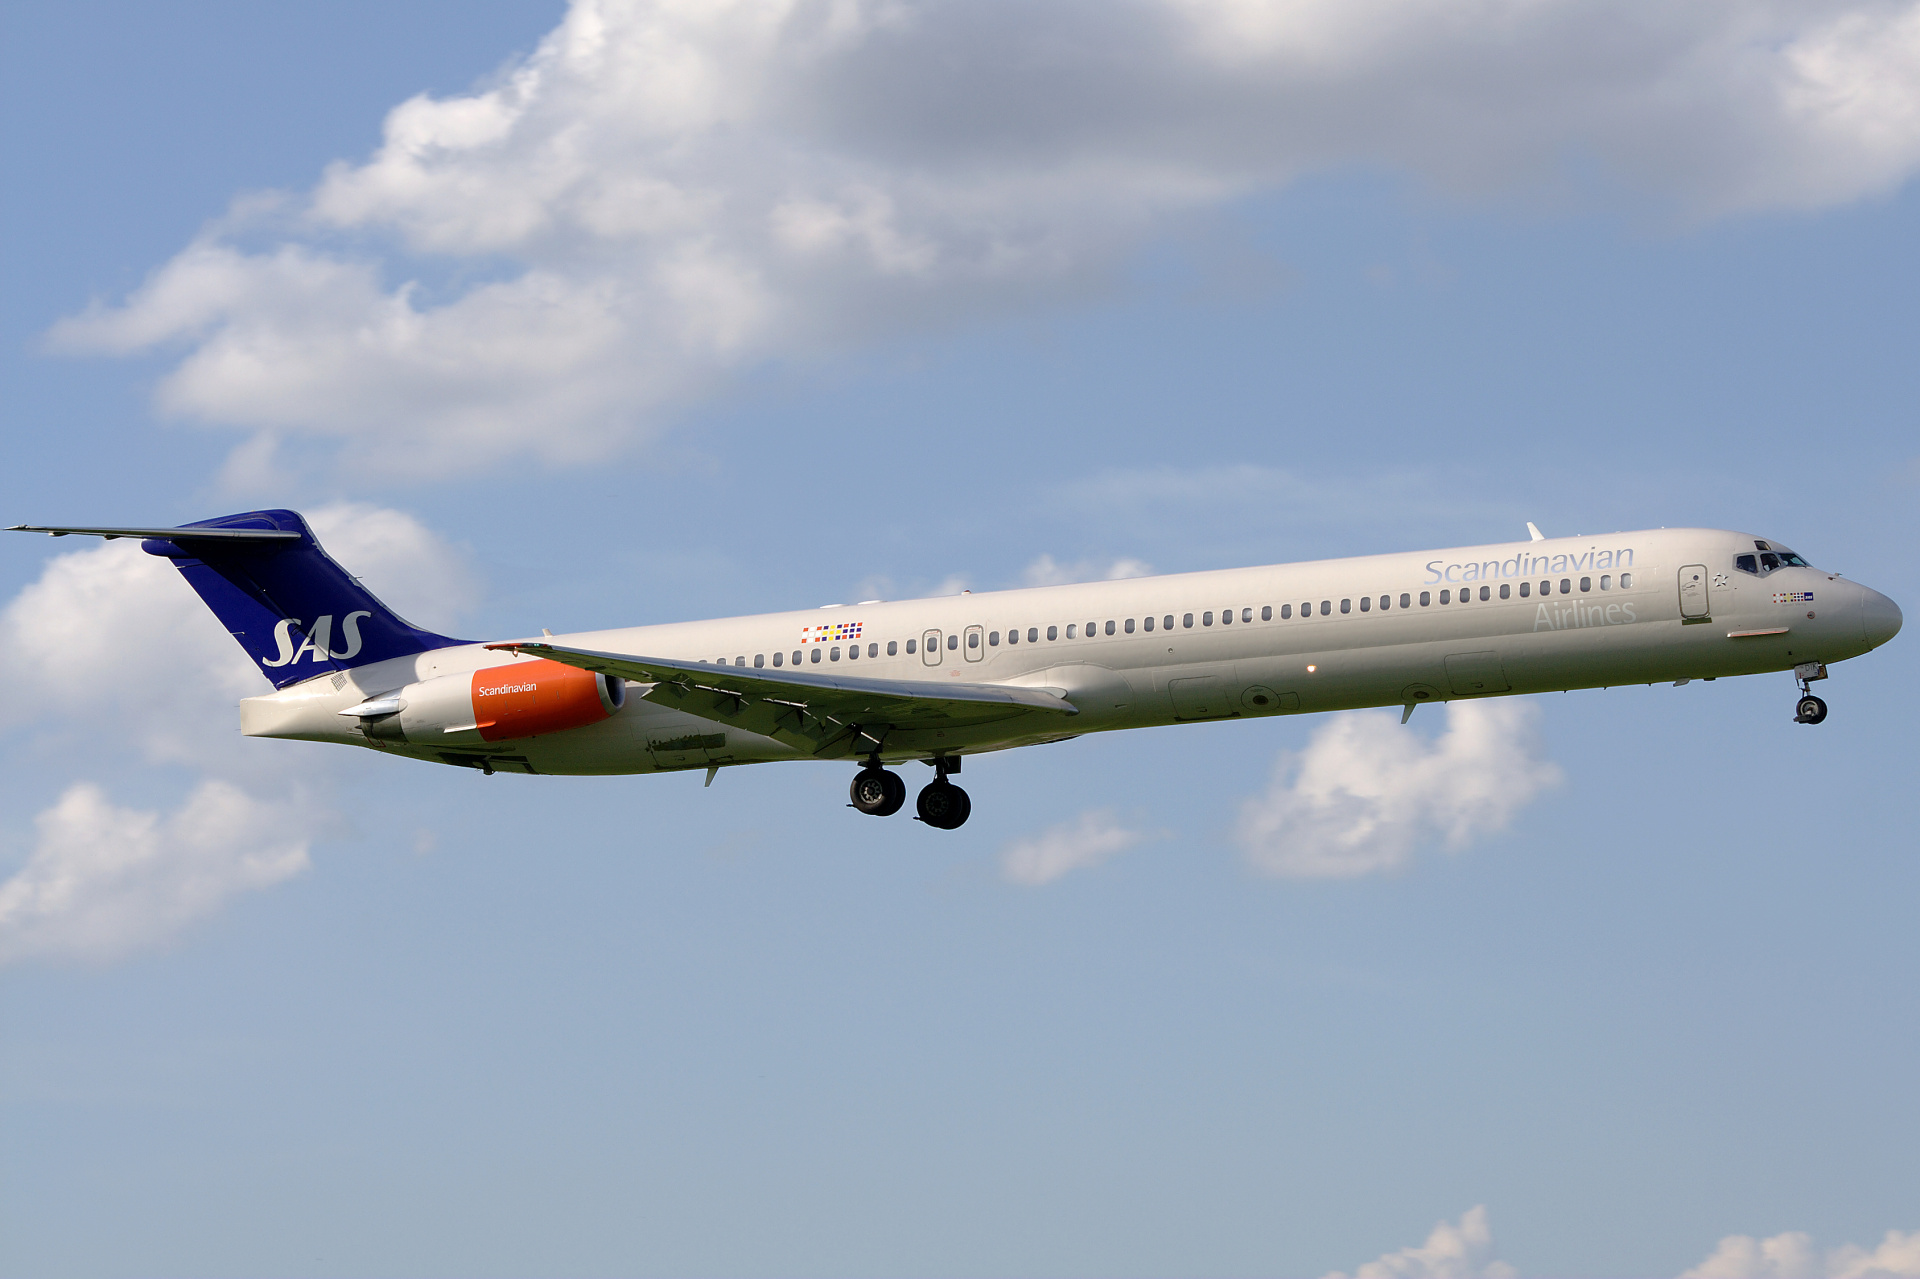 SE-DIK (Aircraft » EPWA Spotting » McDonnell Douglas MD-82 » SAS Scandinavian Airlines)